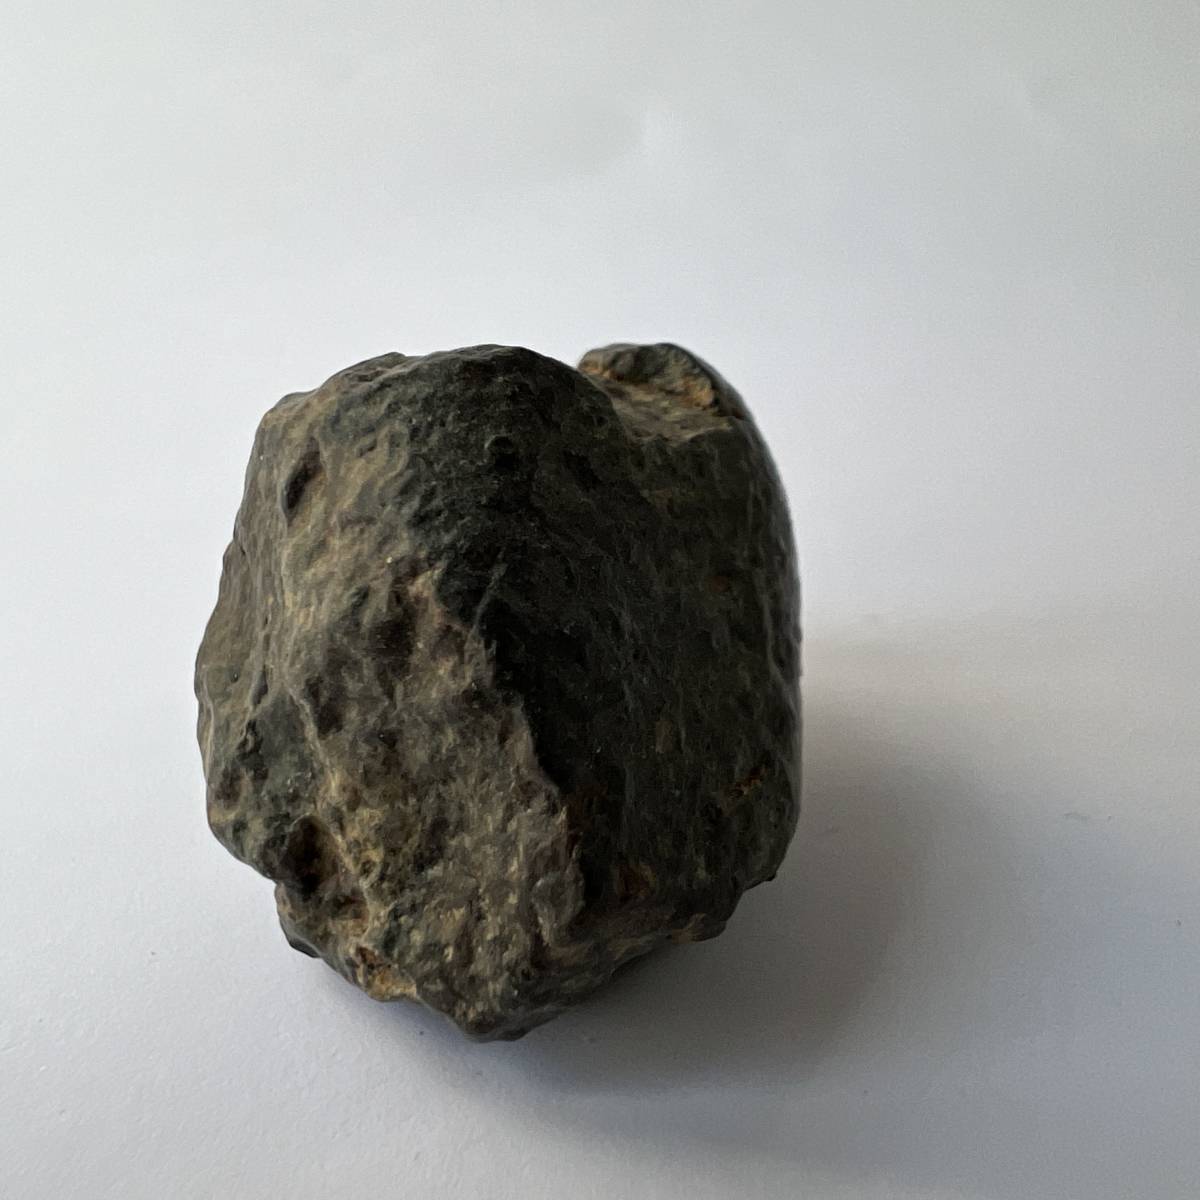 【E22163】 石質隕石 普通コンドライト 隕石 Condrite NWA869 メテオライト 天然石 パワーストーン